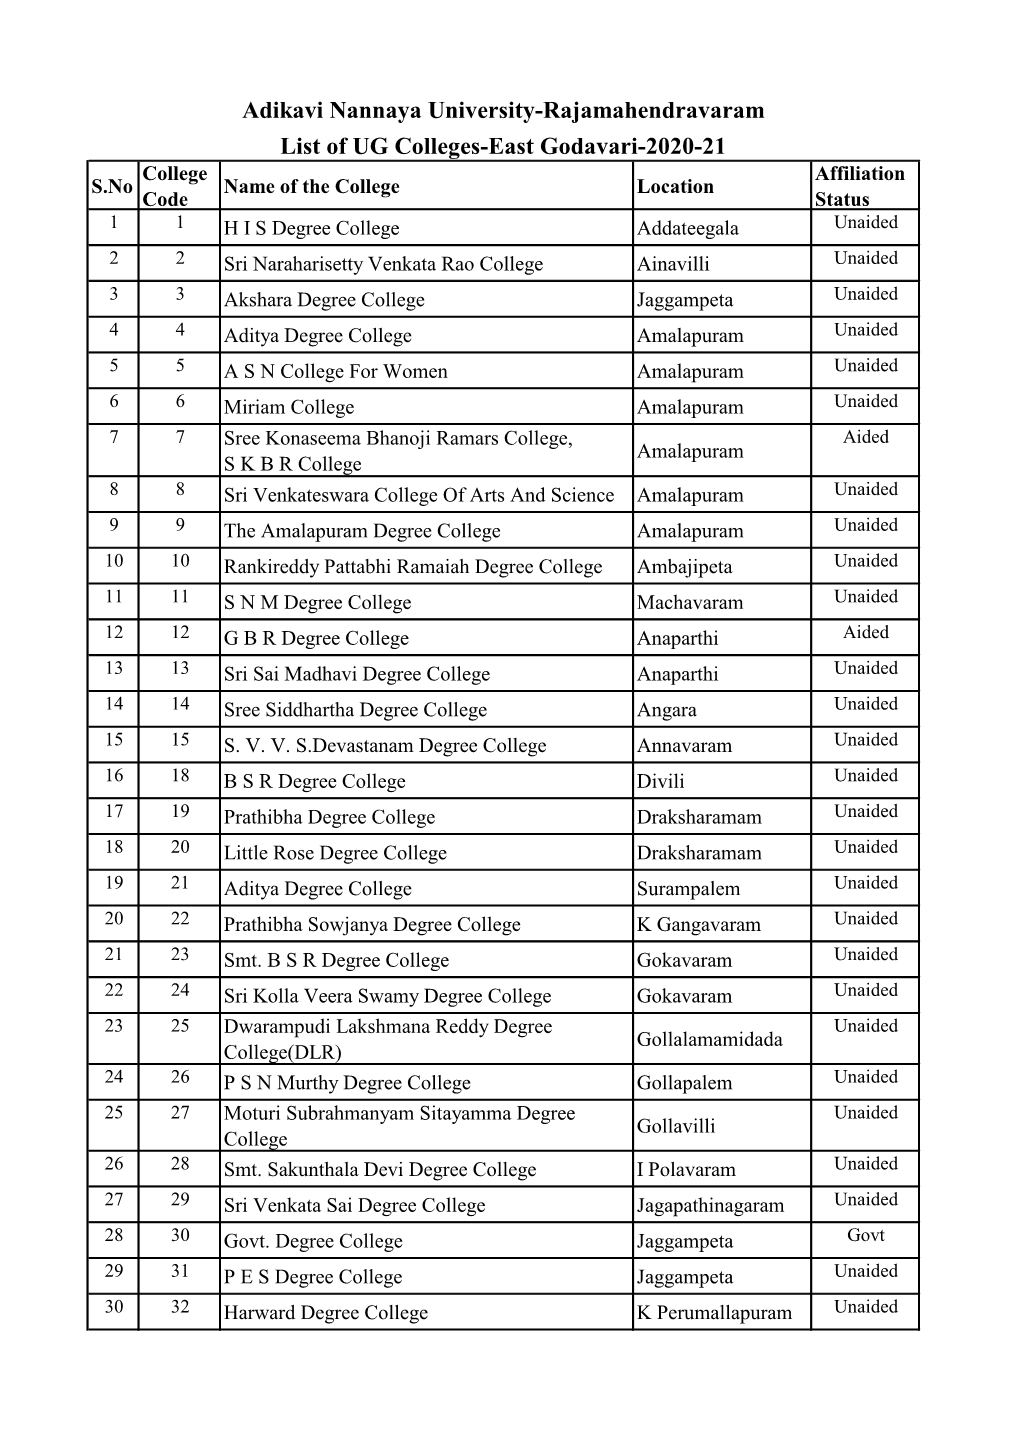 Adikavi Nannaya University-Rajamahendravaram List of UG Colleges-East Godavari-2020-21